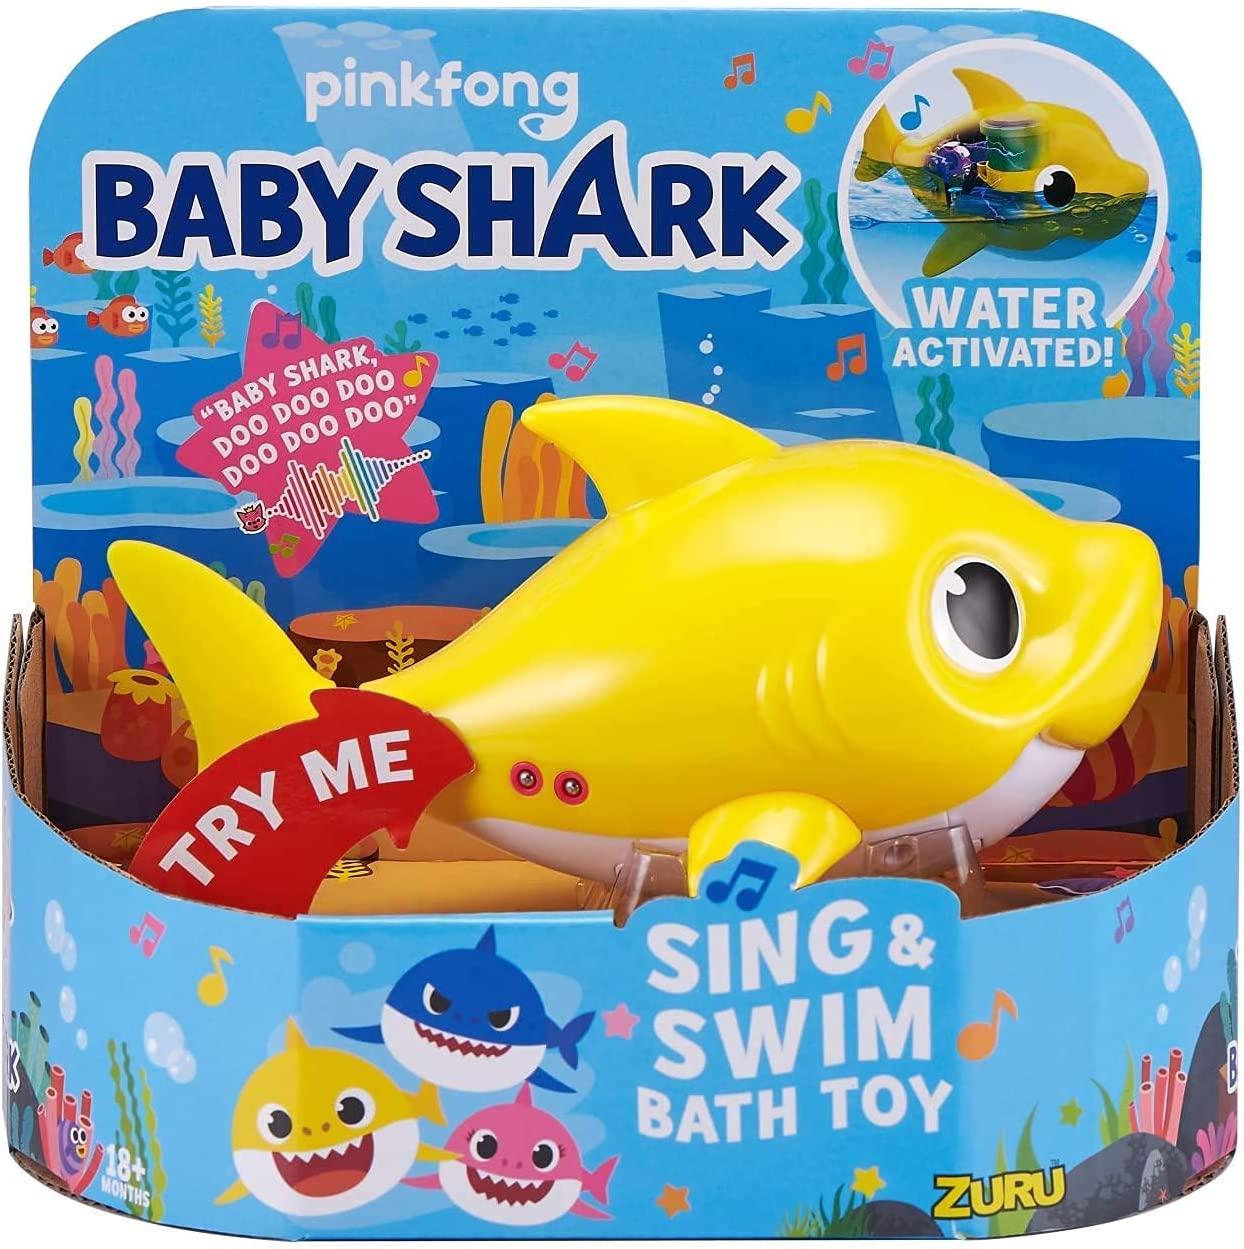 Recalled product - Zuru Recalls 7.5 Million Baby Shark and...